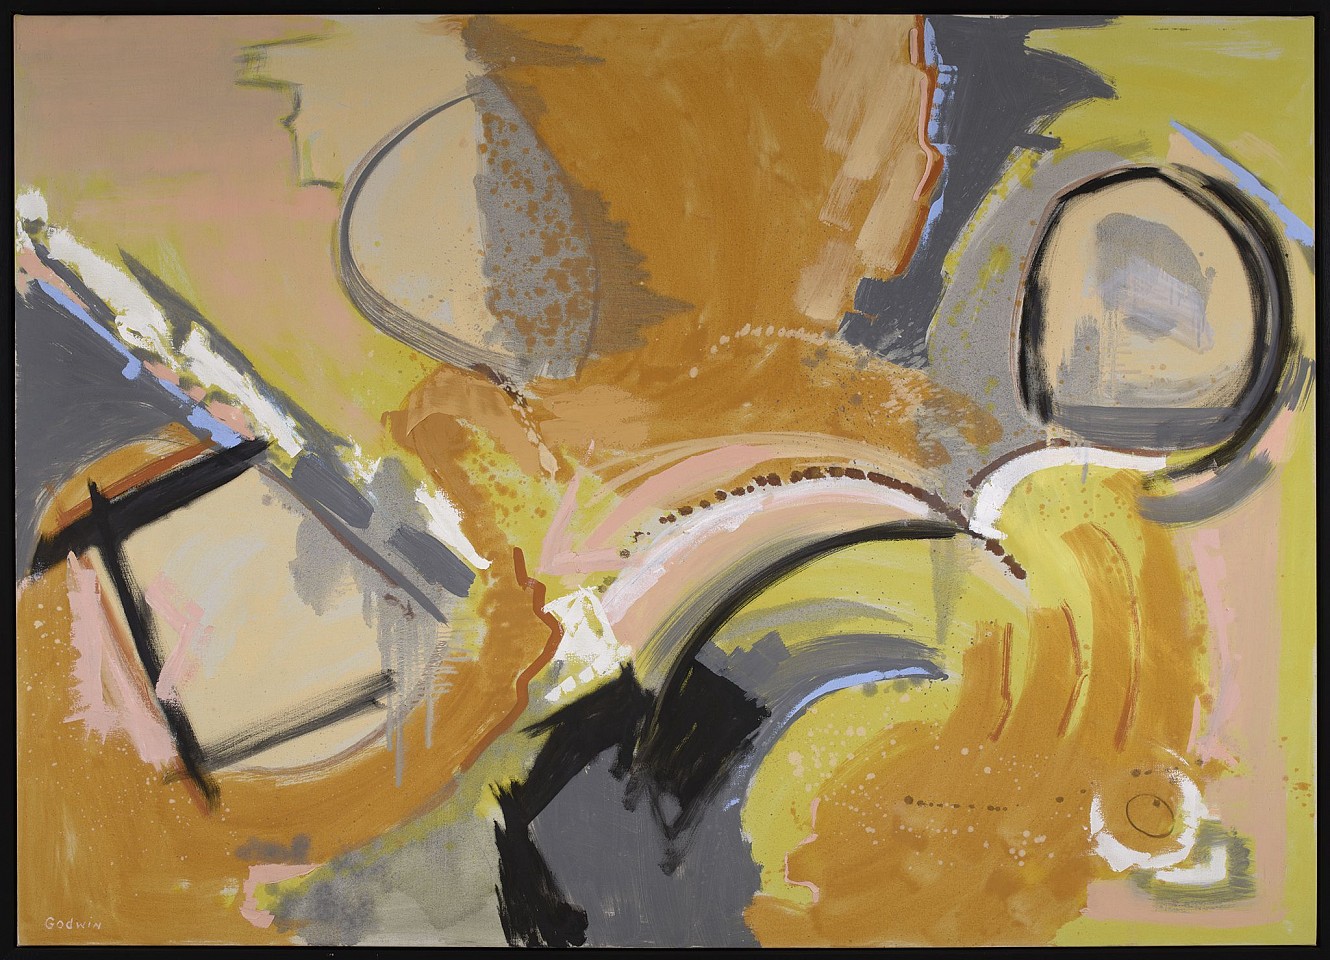 Judith Godwin, Sirocco | SOLD, 1992
Oil on canvas, 64 x 90 in. (162.6 x 228.6 cm)
GOD-00100